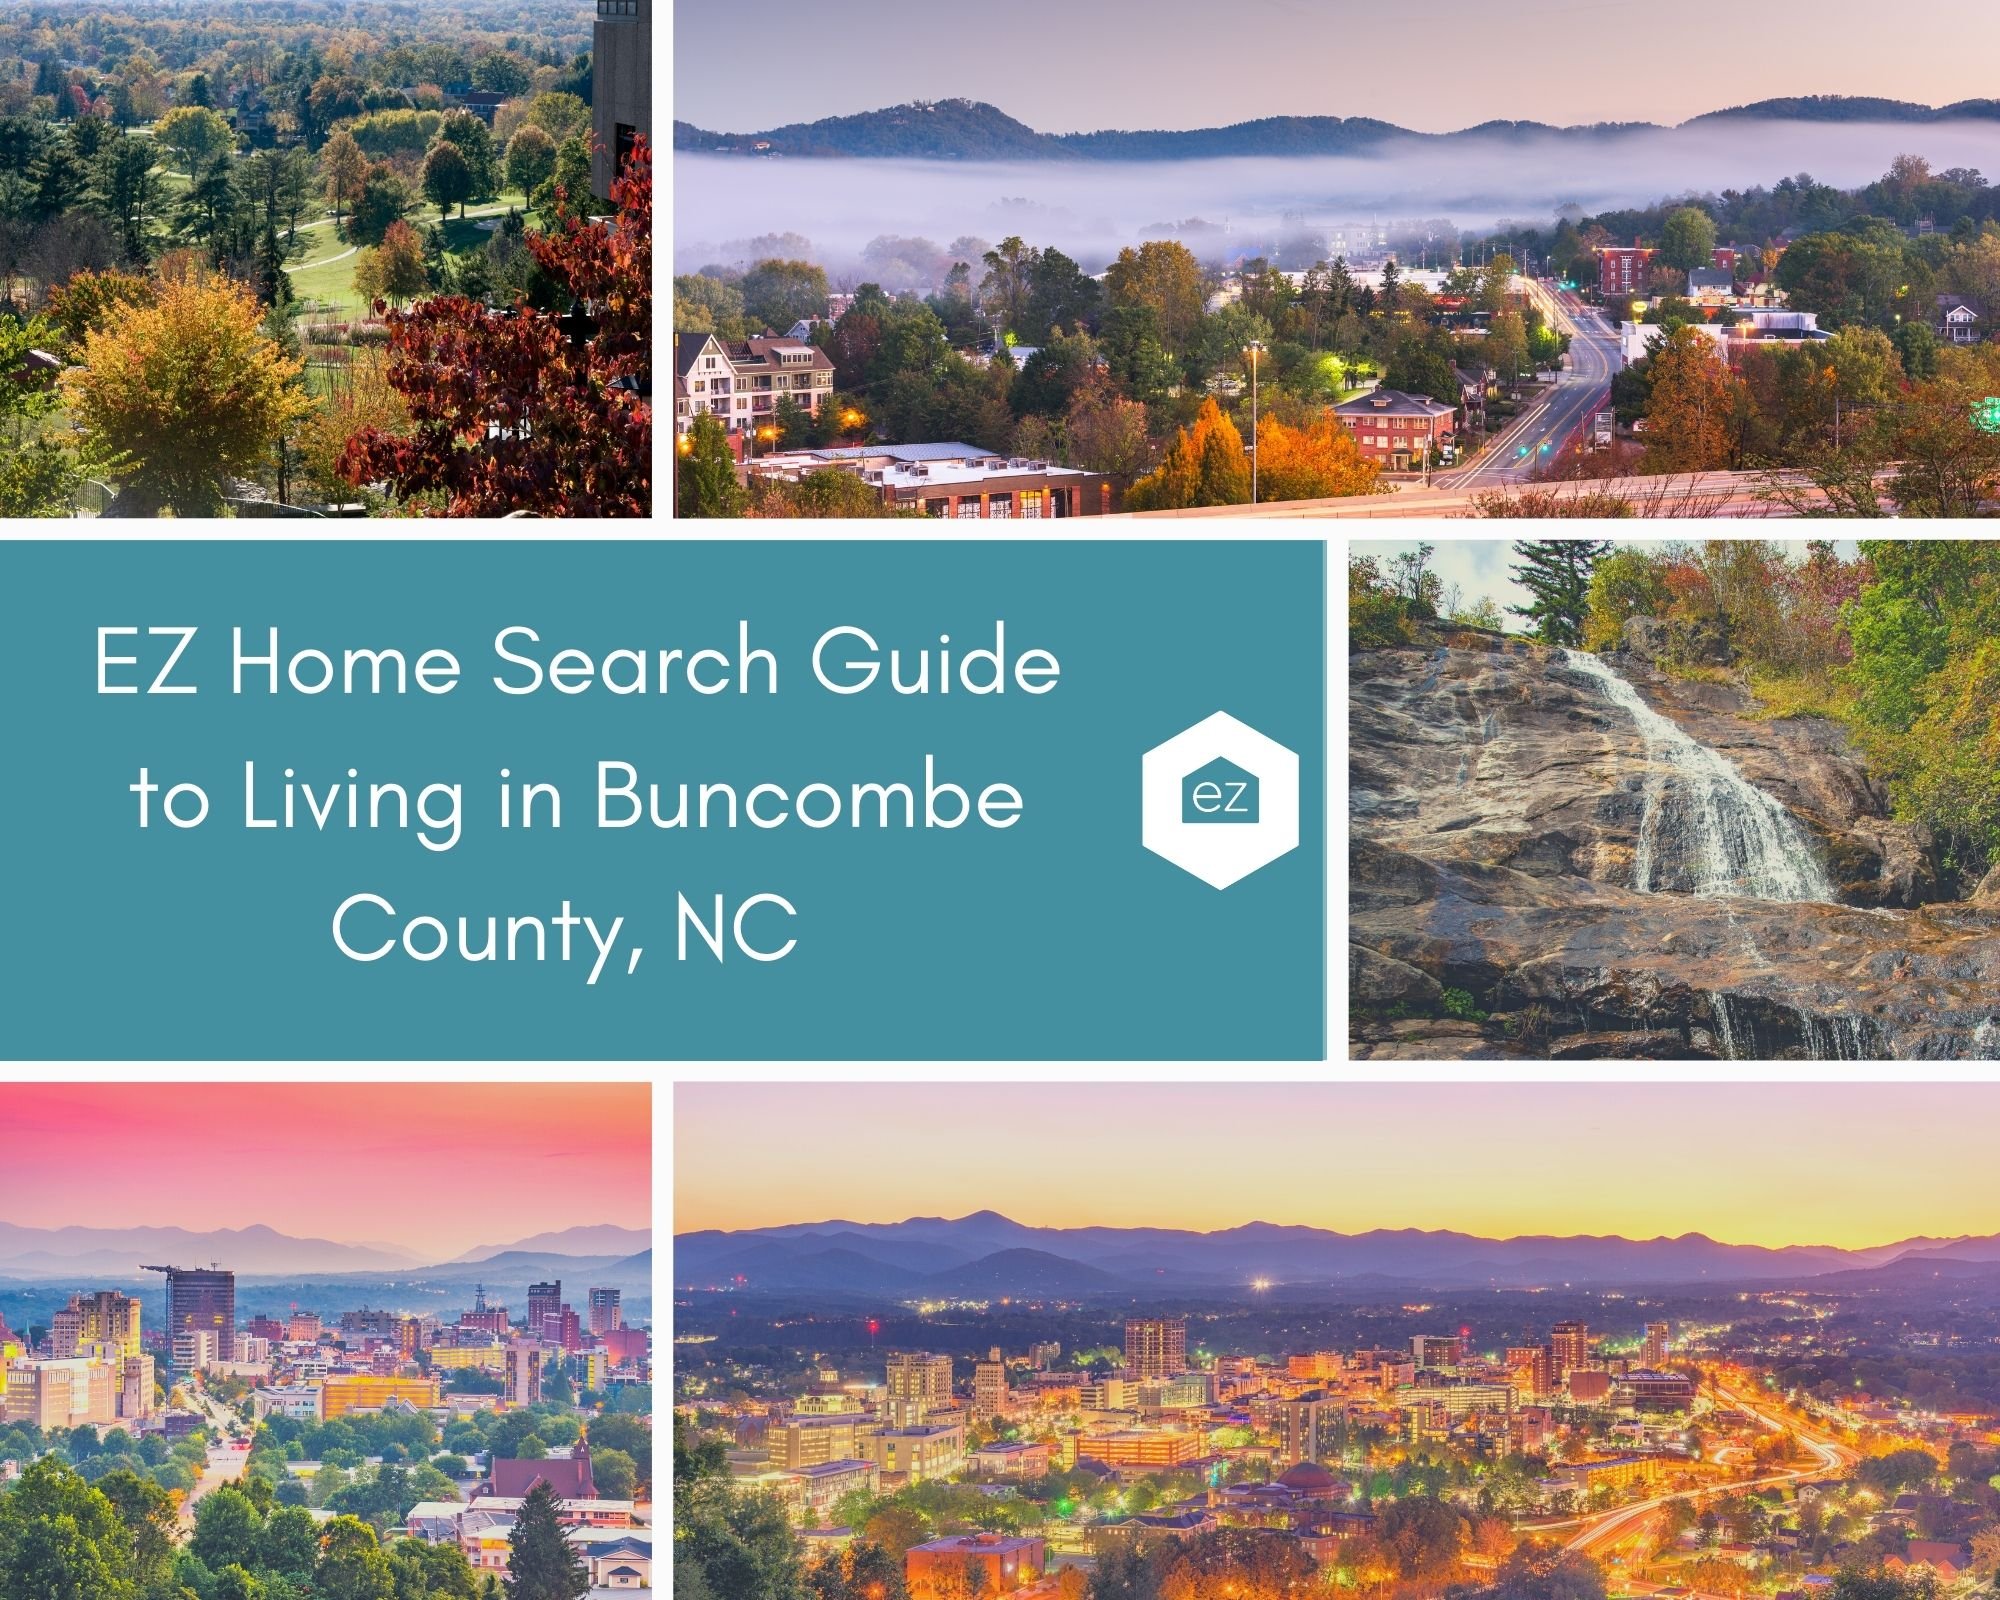 Photos of Buncombe County, and Asheville, North Carolina